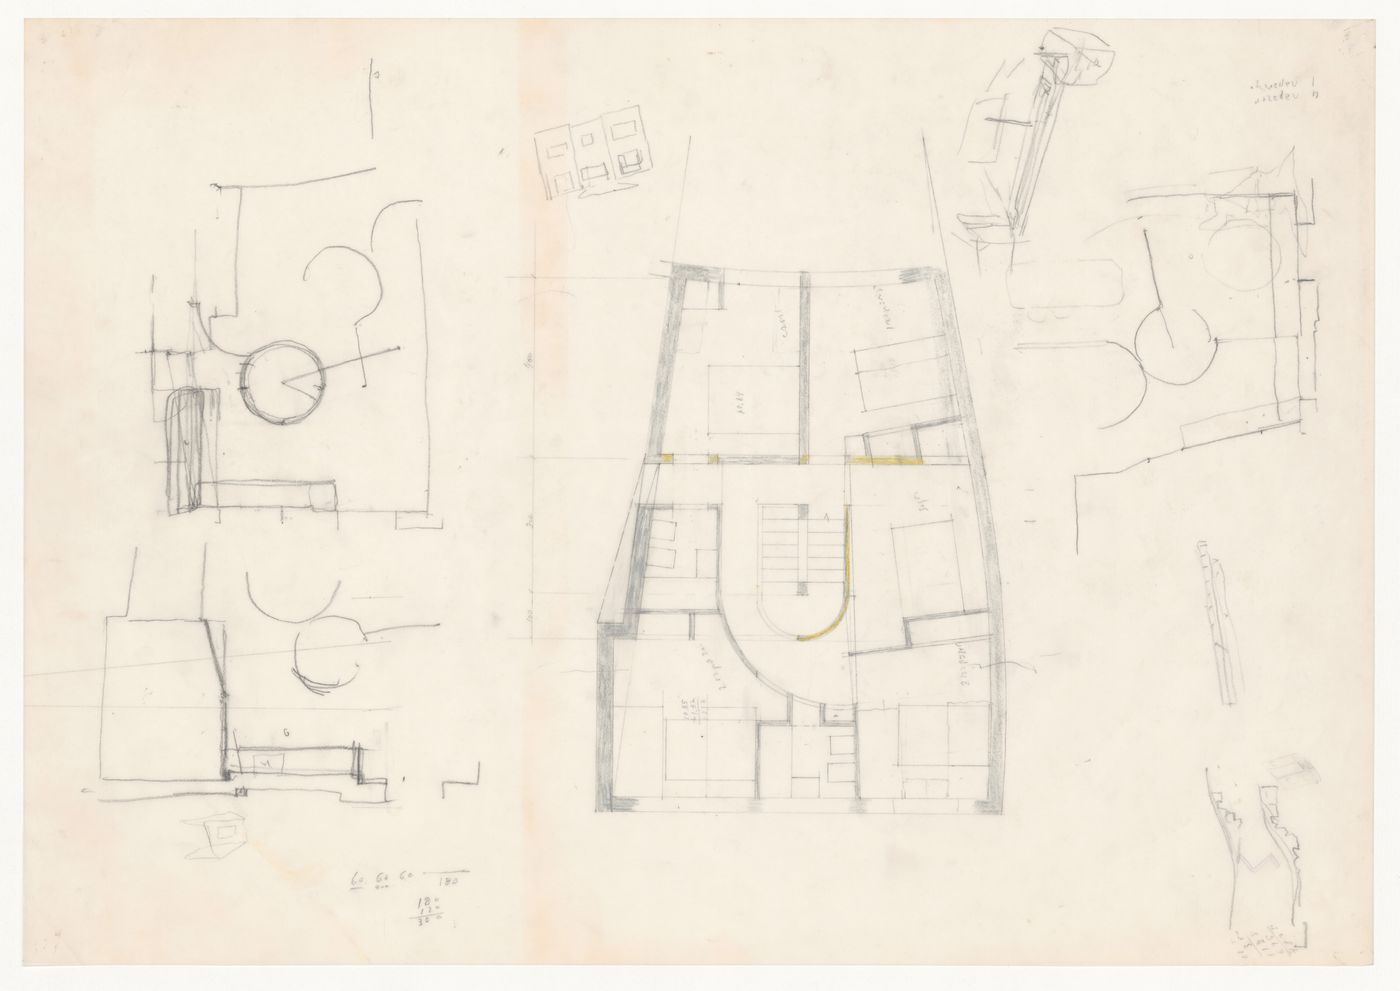 Sketch plan and sketches for Casa Fernando Machado [Fernando Machado house], Porto, Portugal